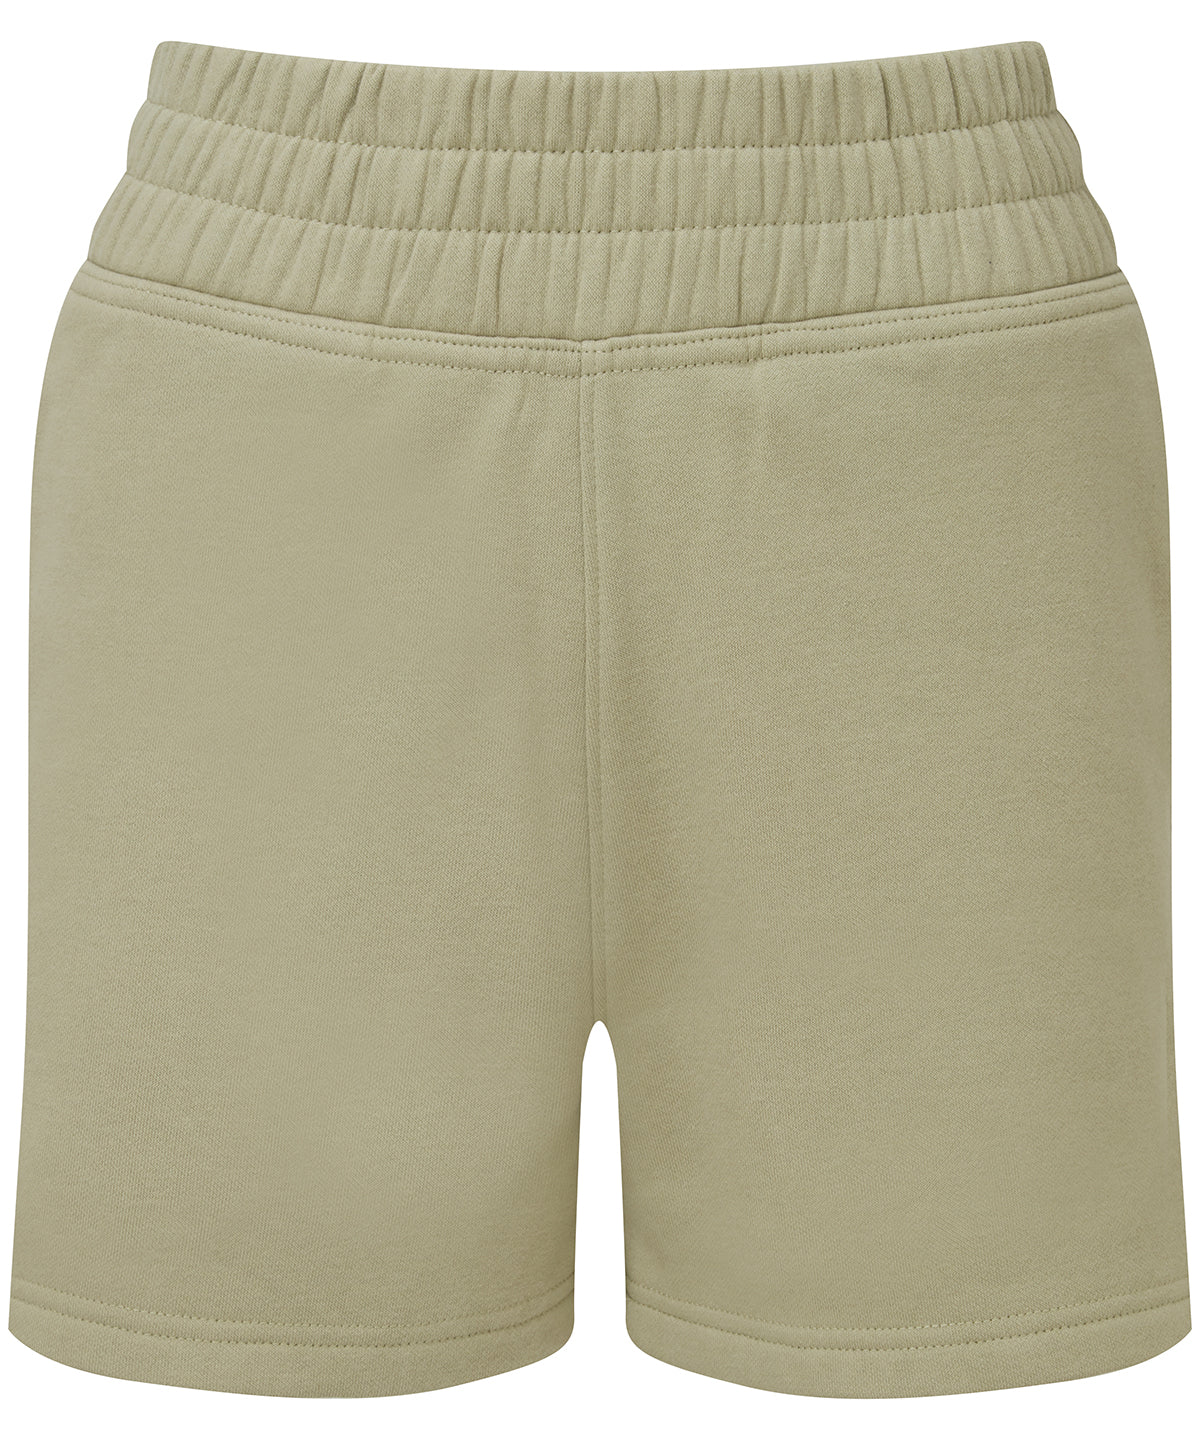 Women's TriDri® jogger shorts